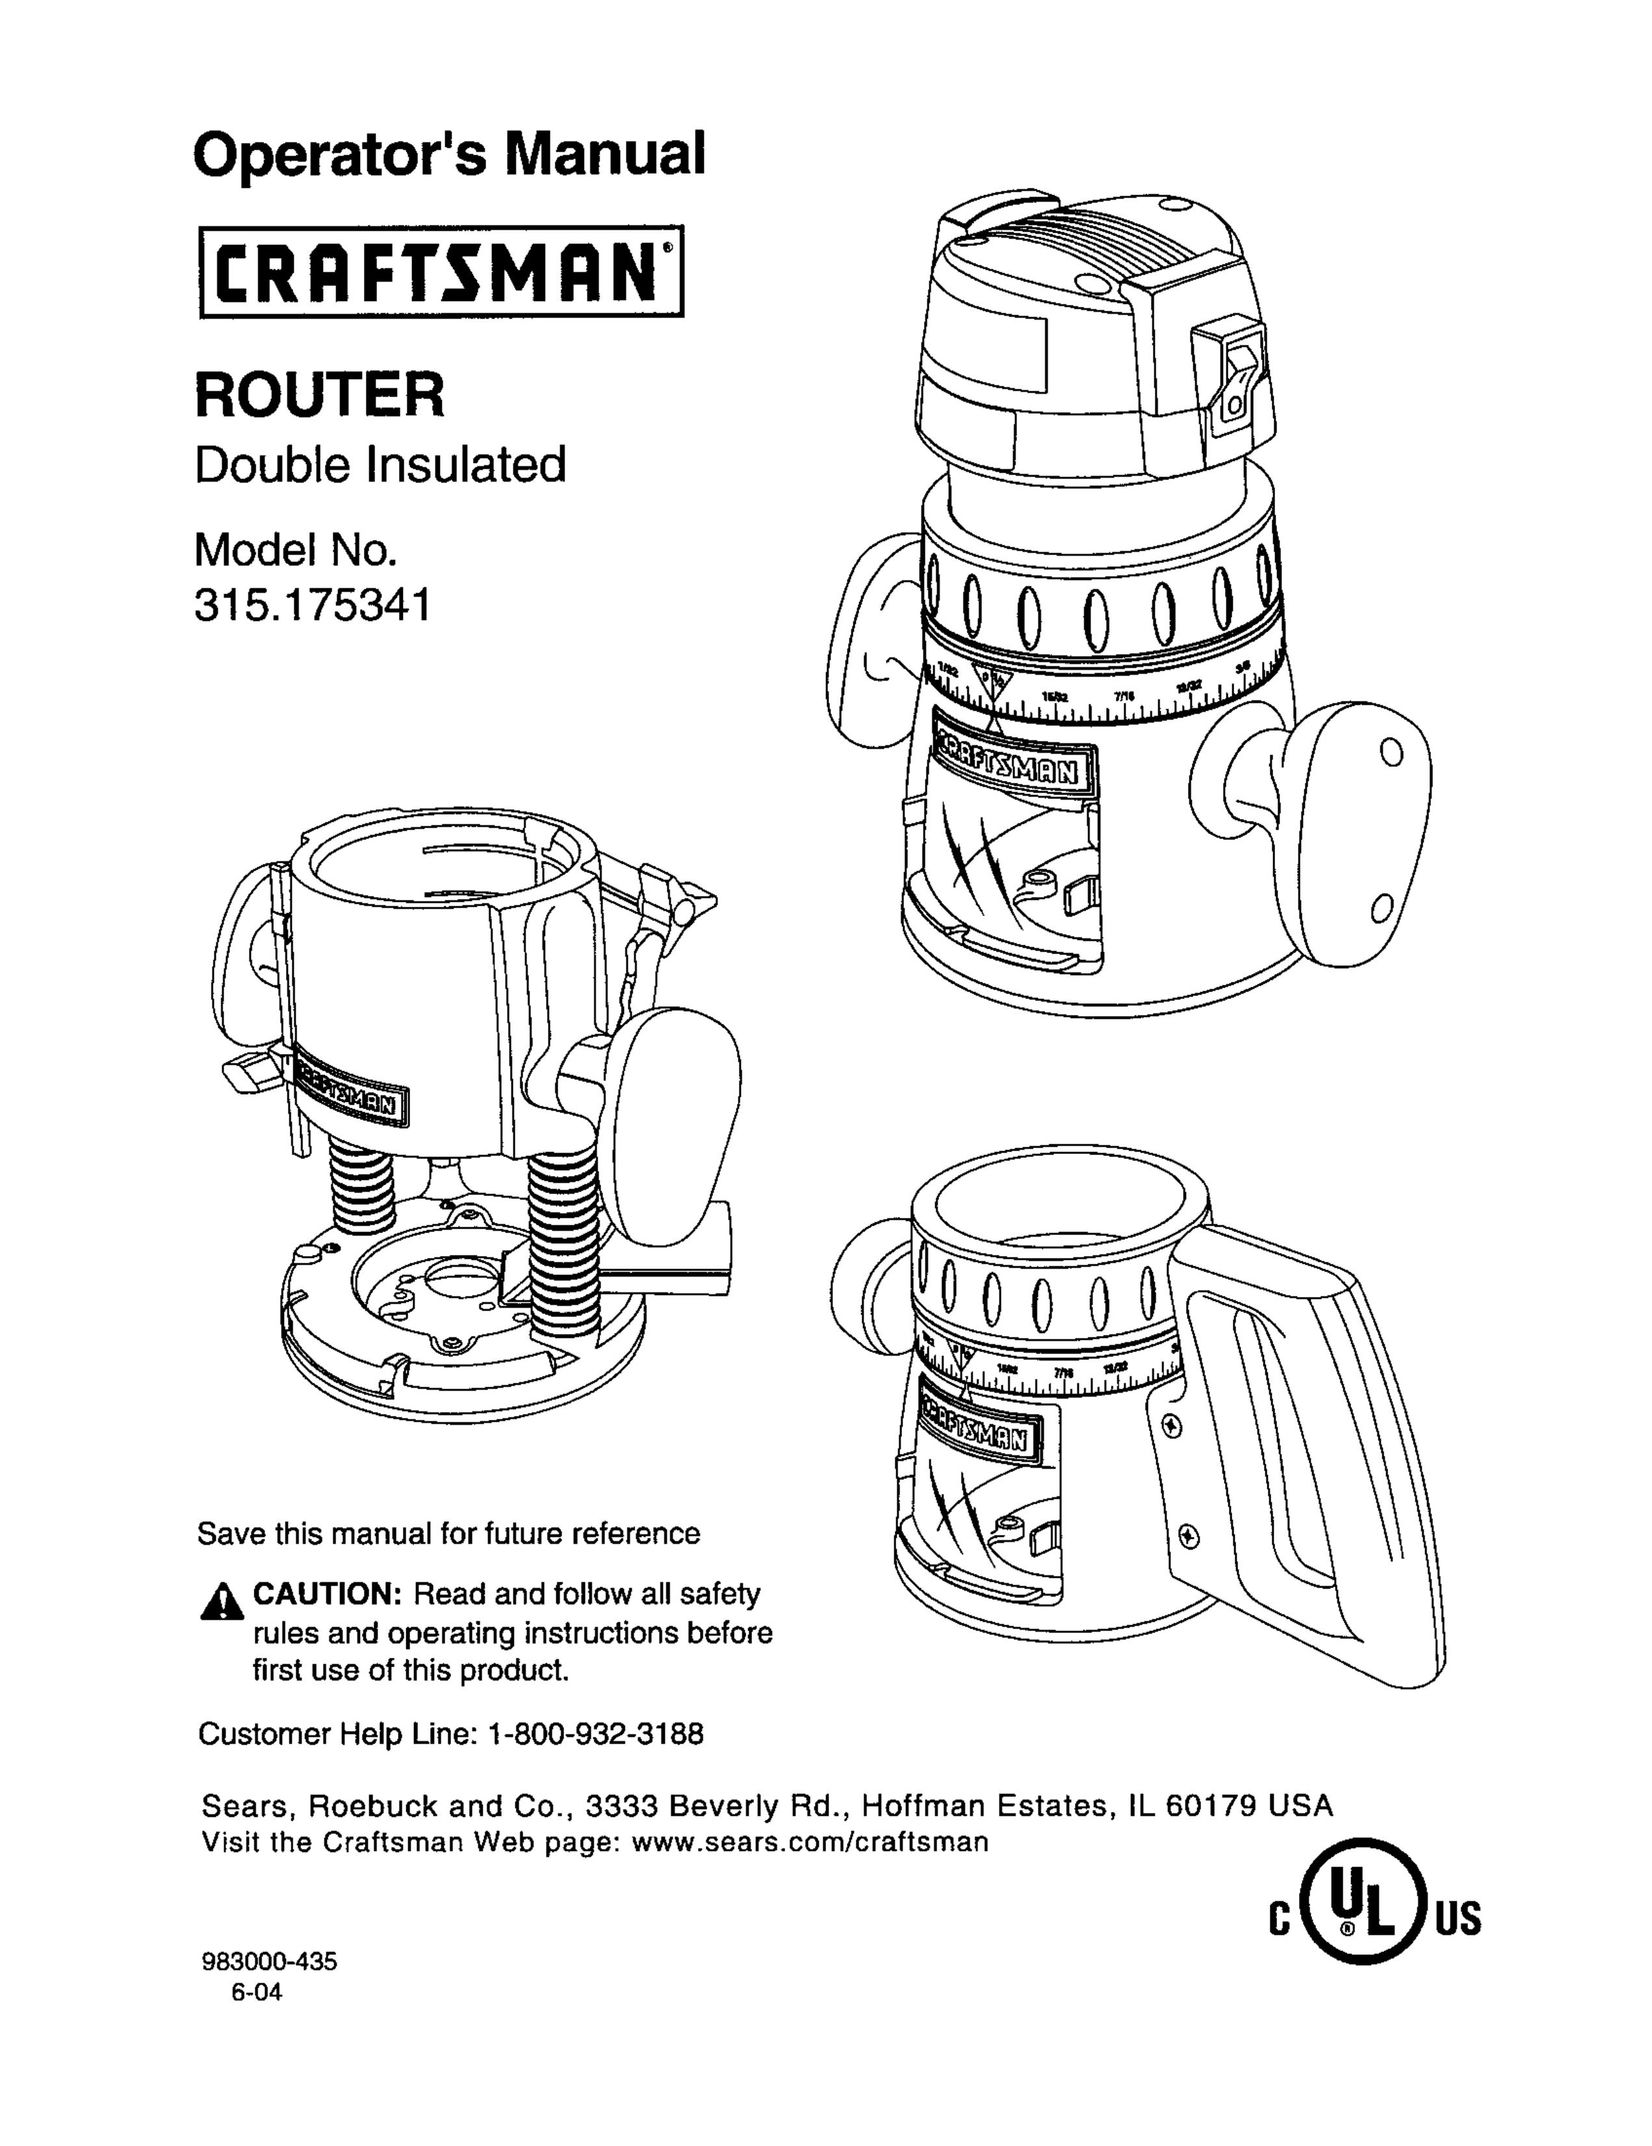 Craftsman 315.175341 Router User Manual